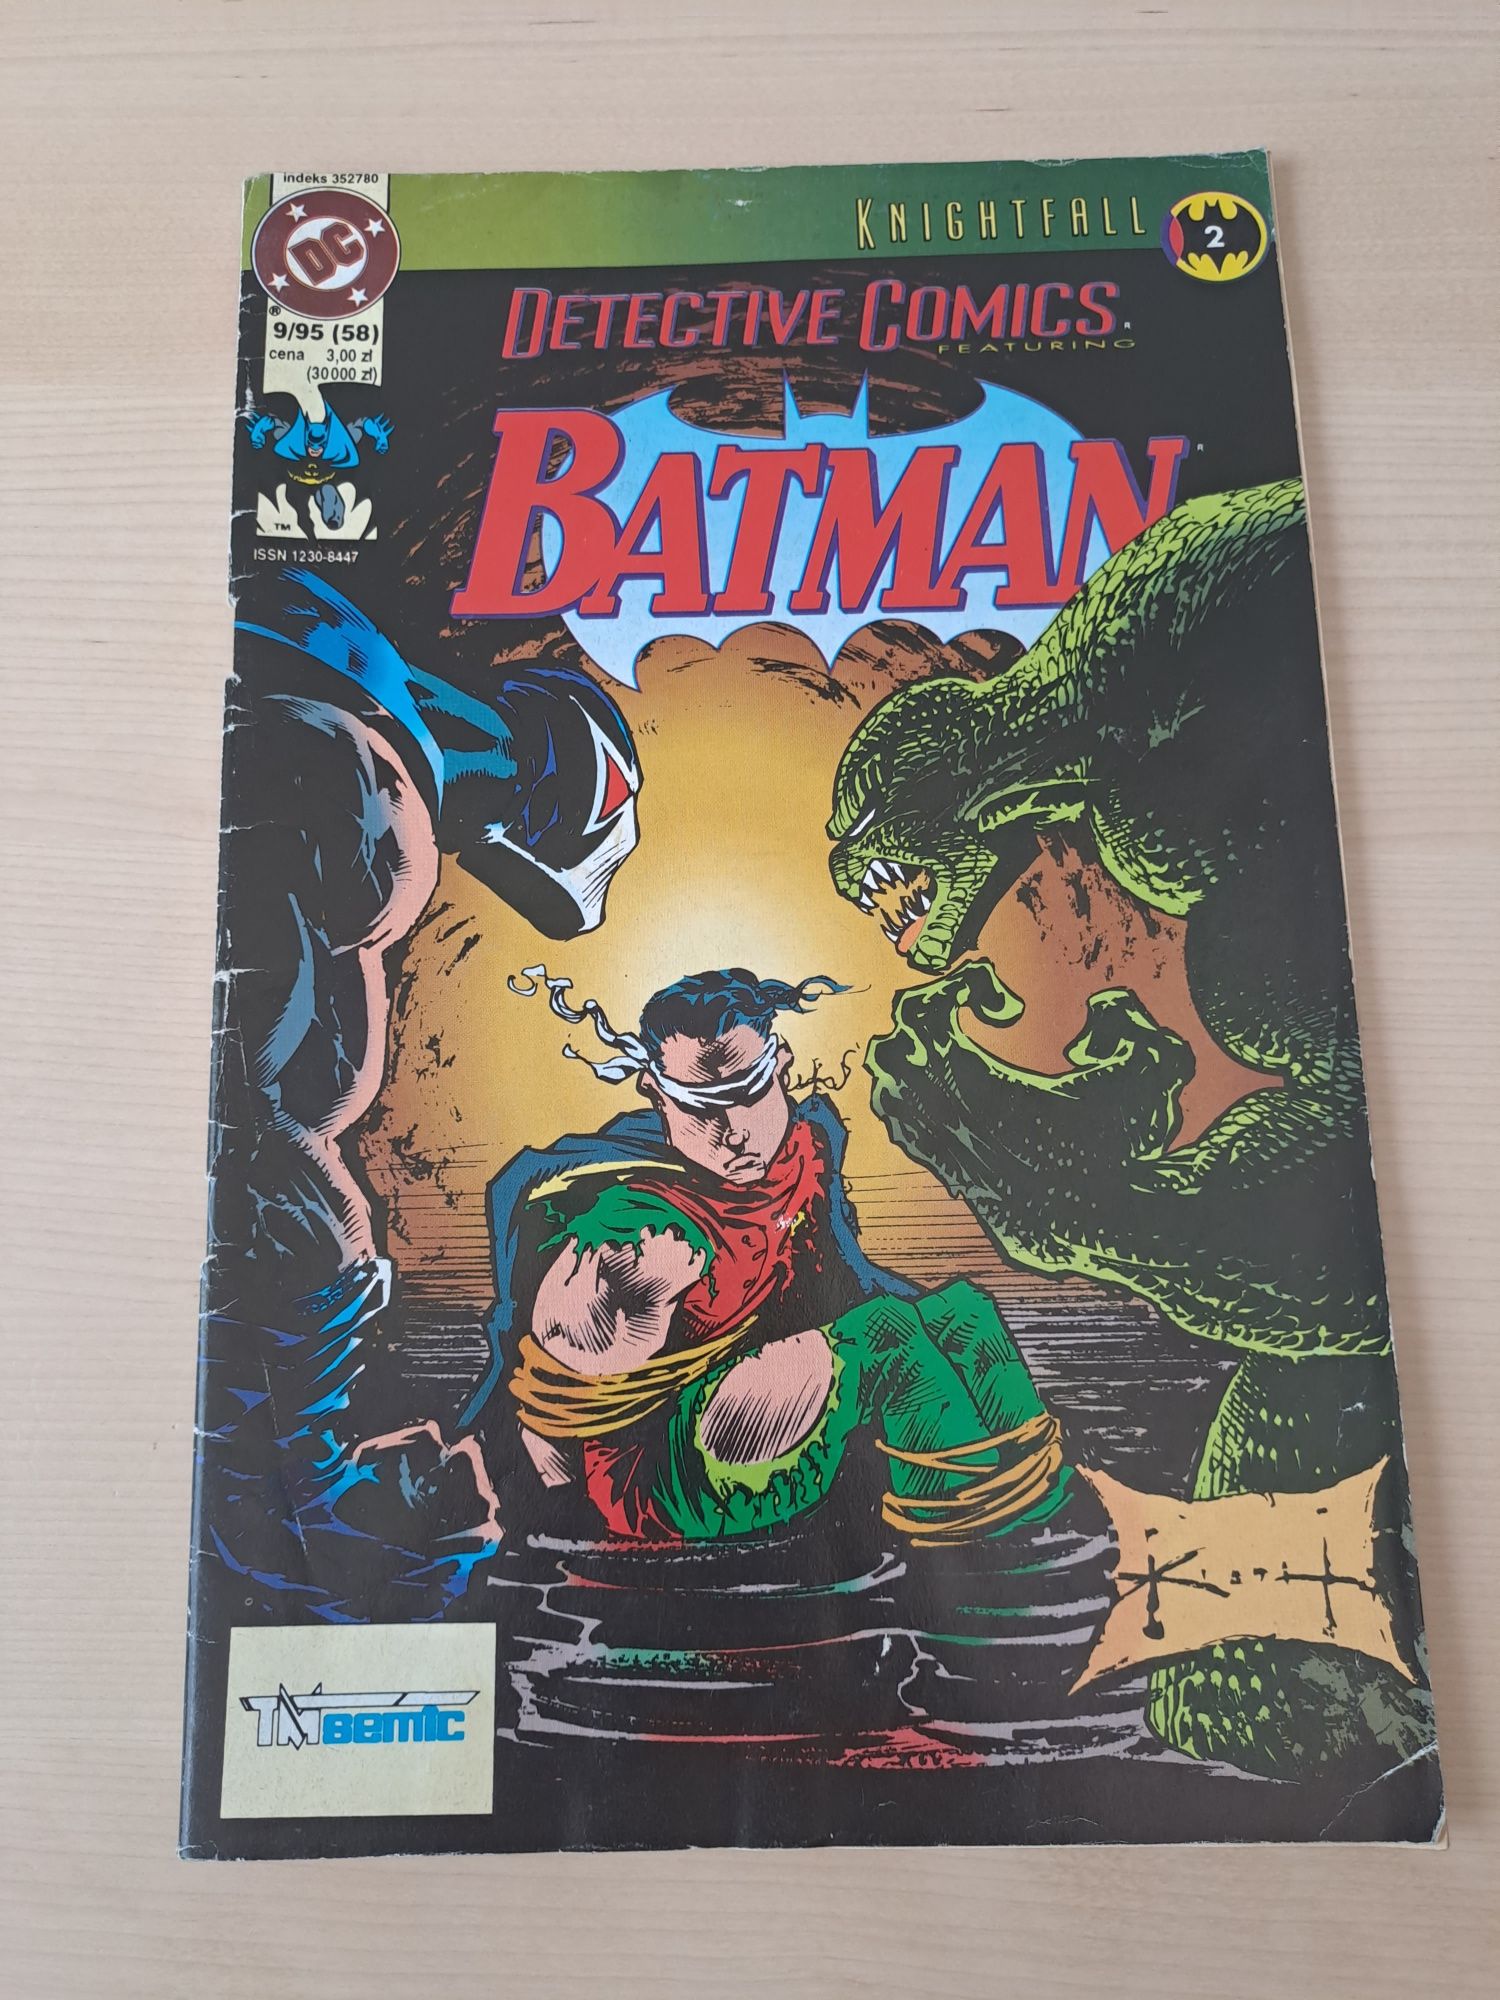 Komiks Batman nr 9/95/58 DC